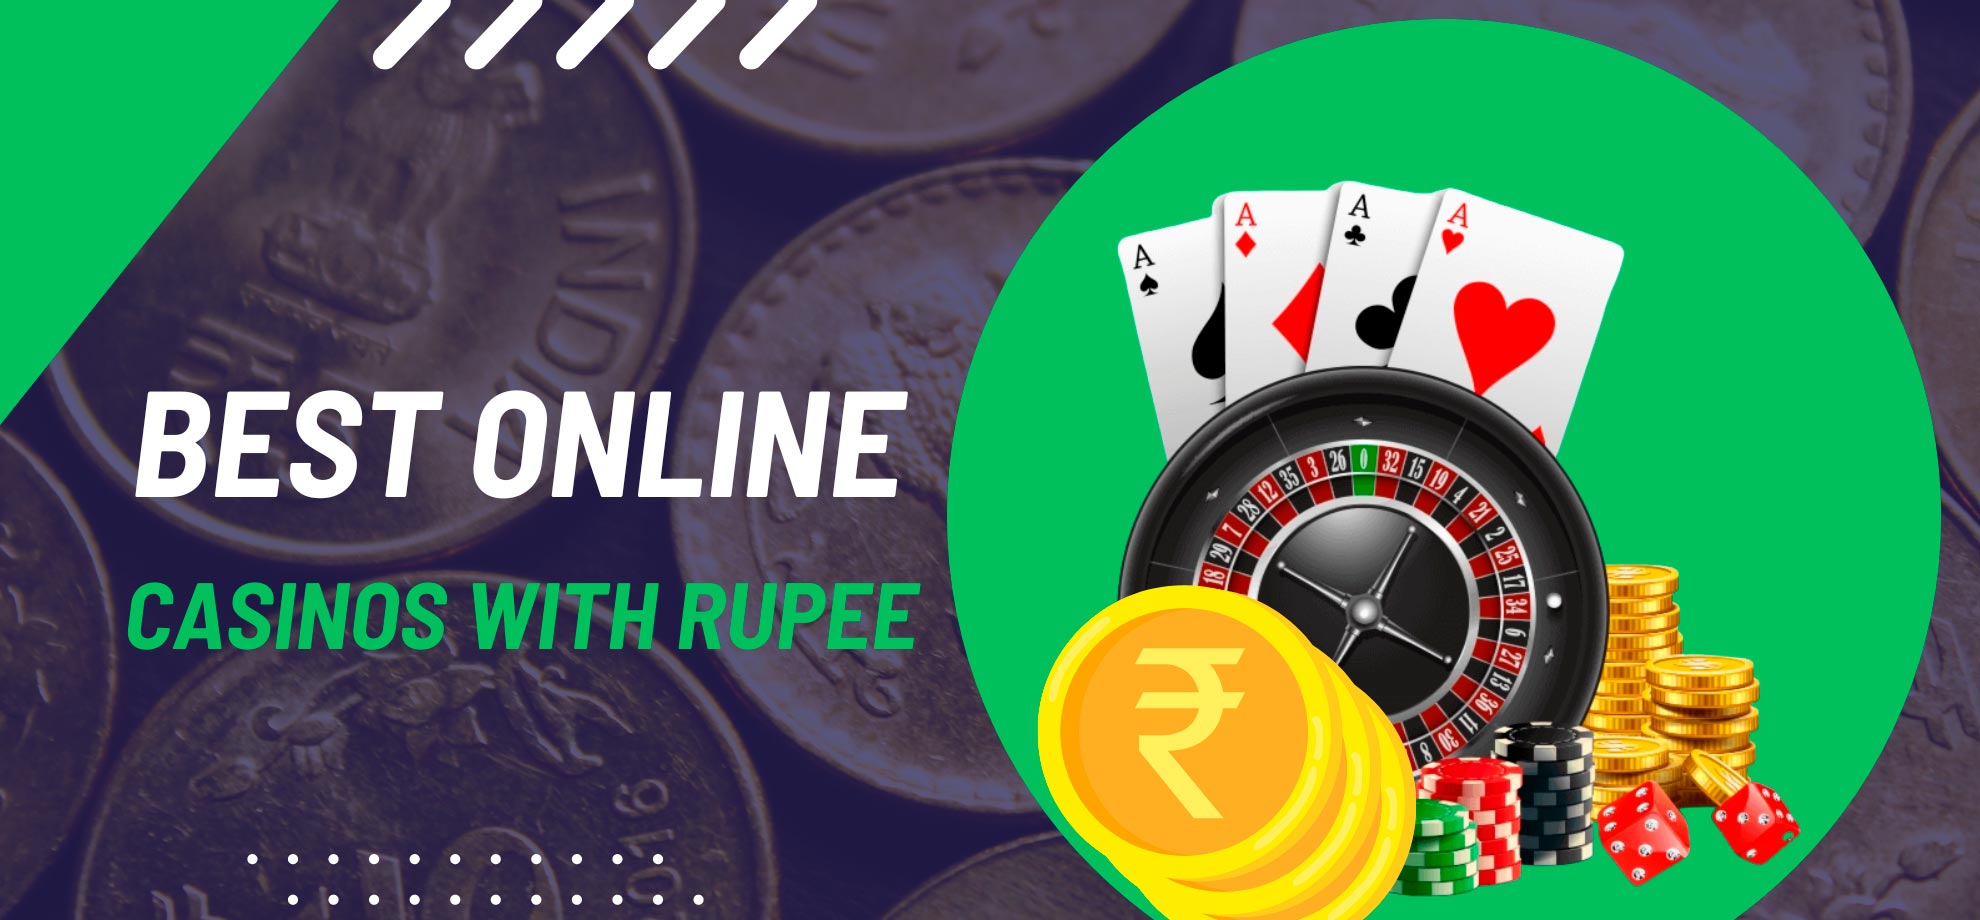 Best Online Casinos with Rupee